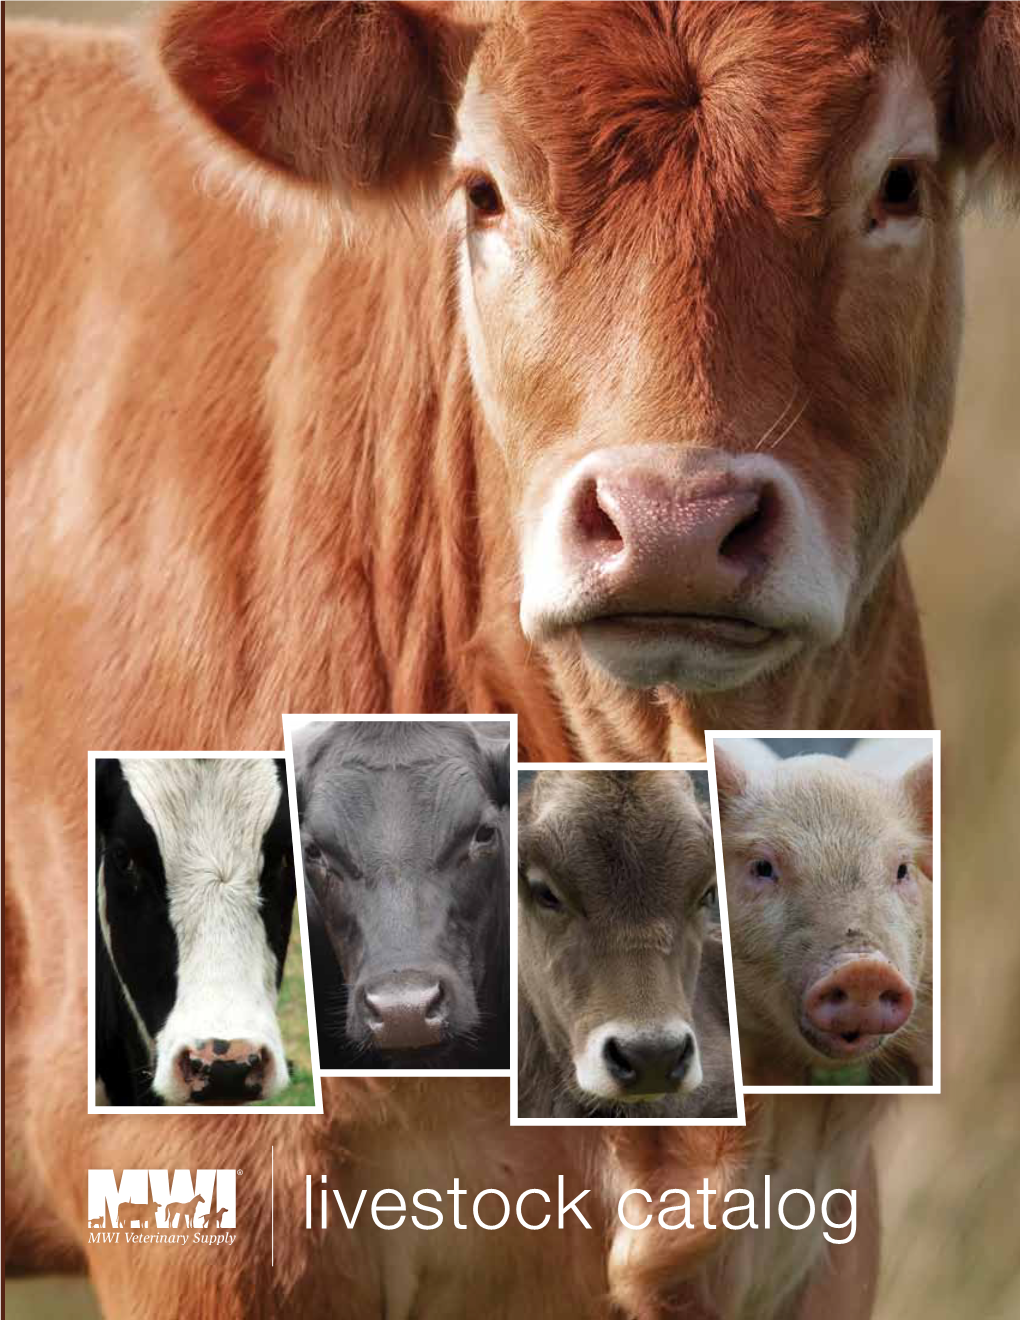 Livestock Catalog